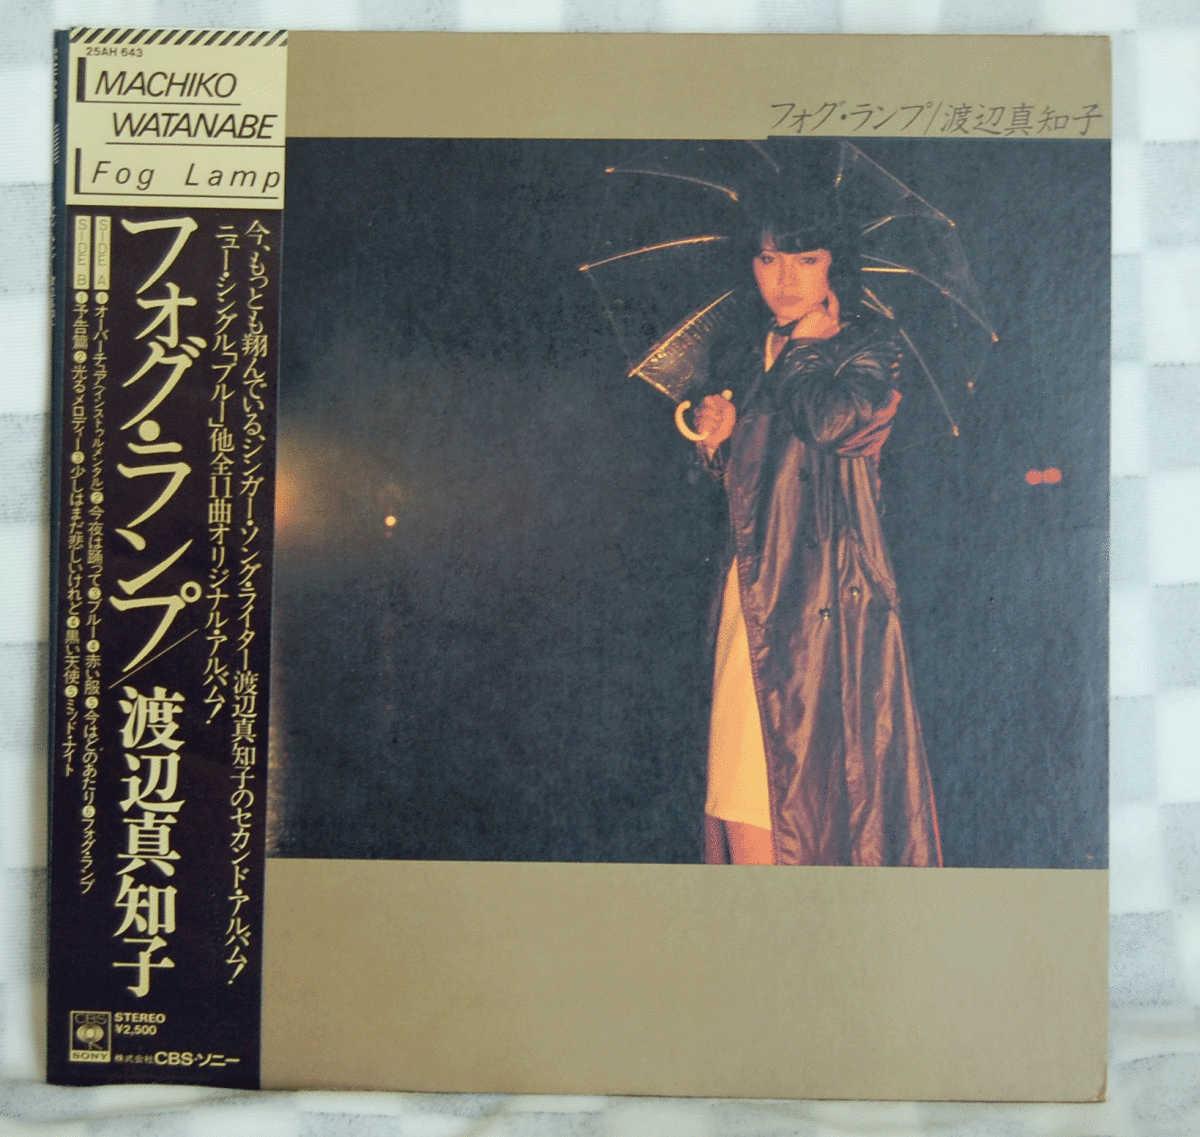  foglamp * lamp / Watanabe Machiko LP record..